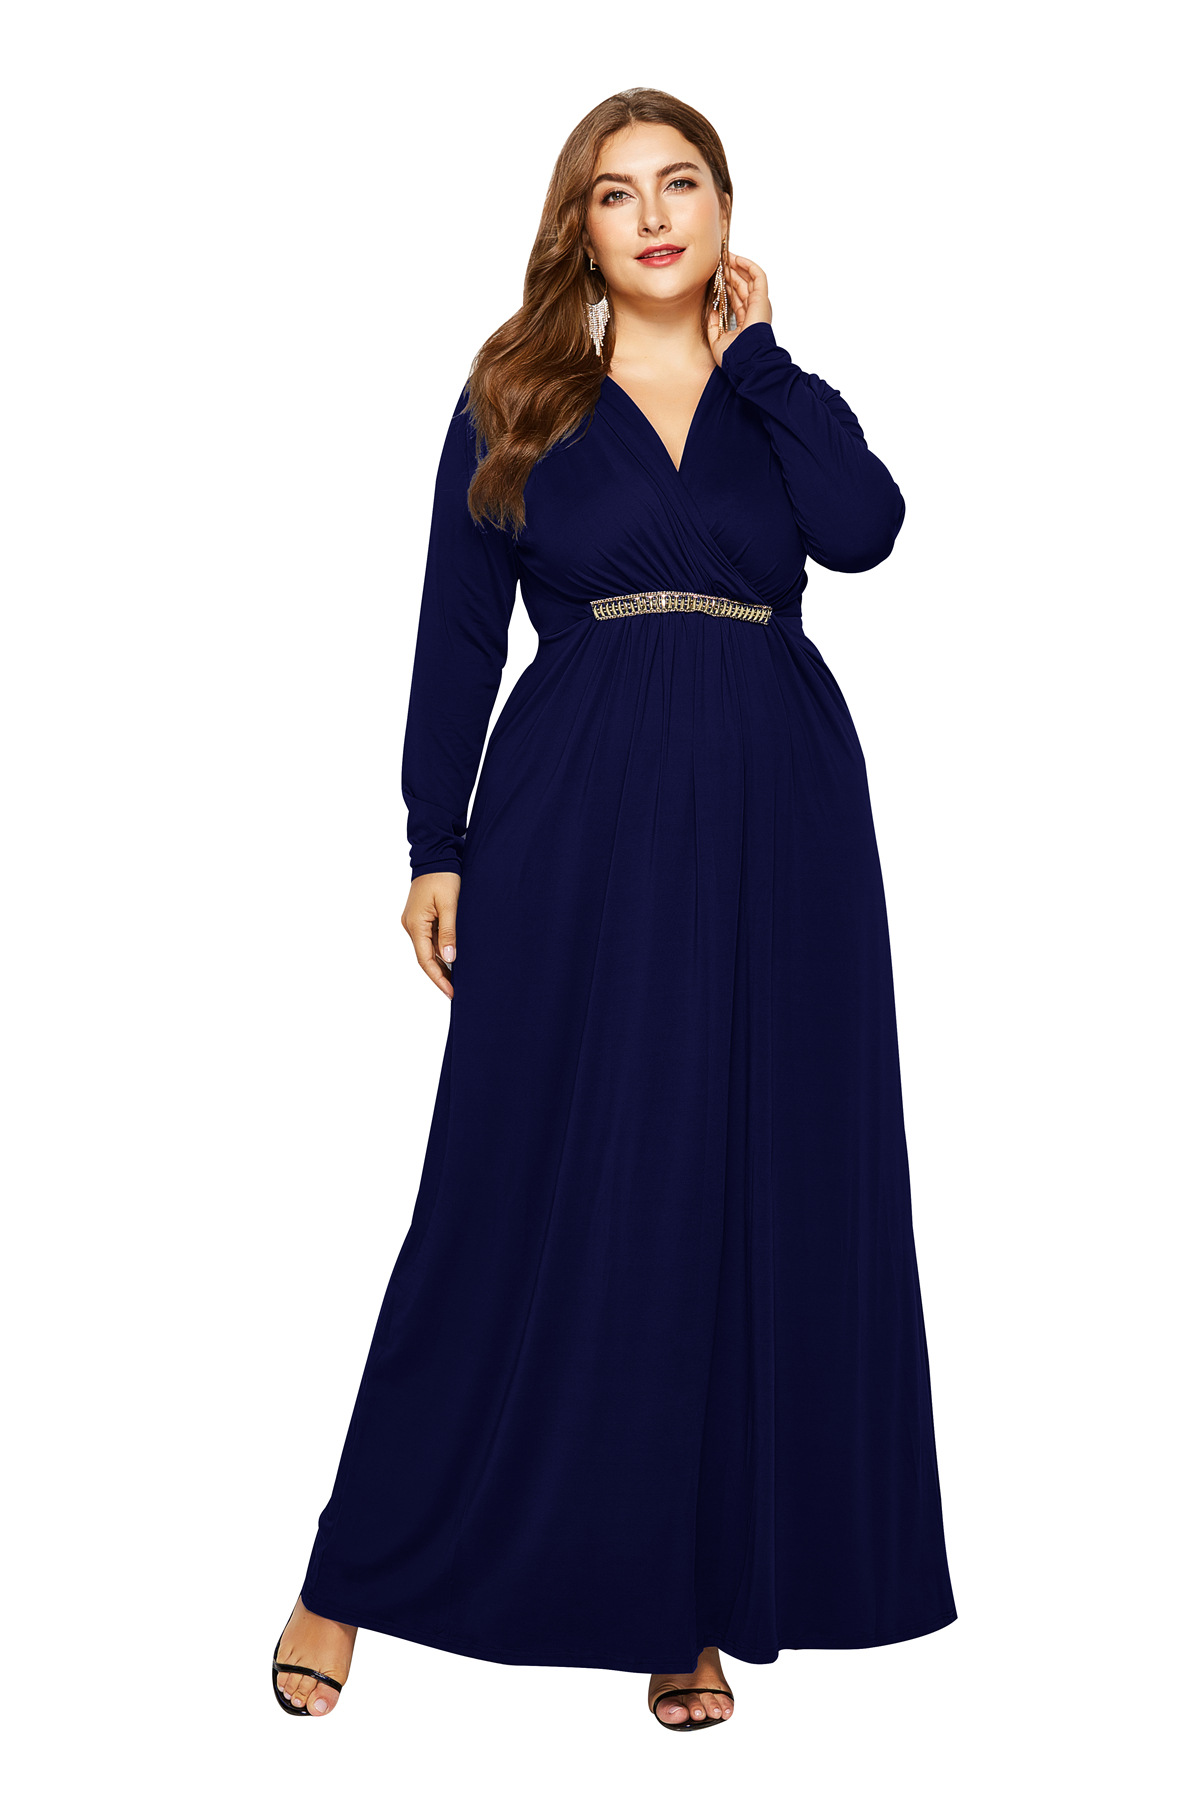 long sleeve navy blue dress plus size